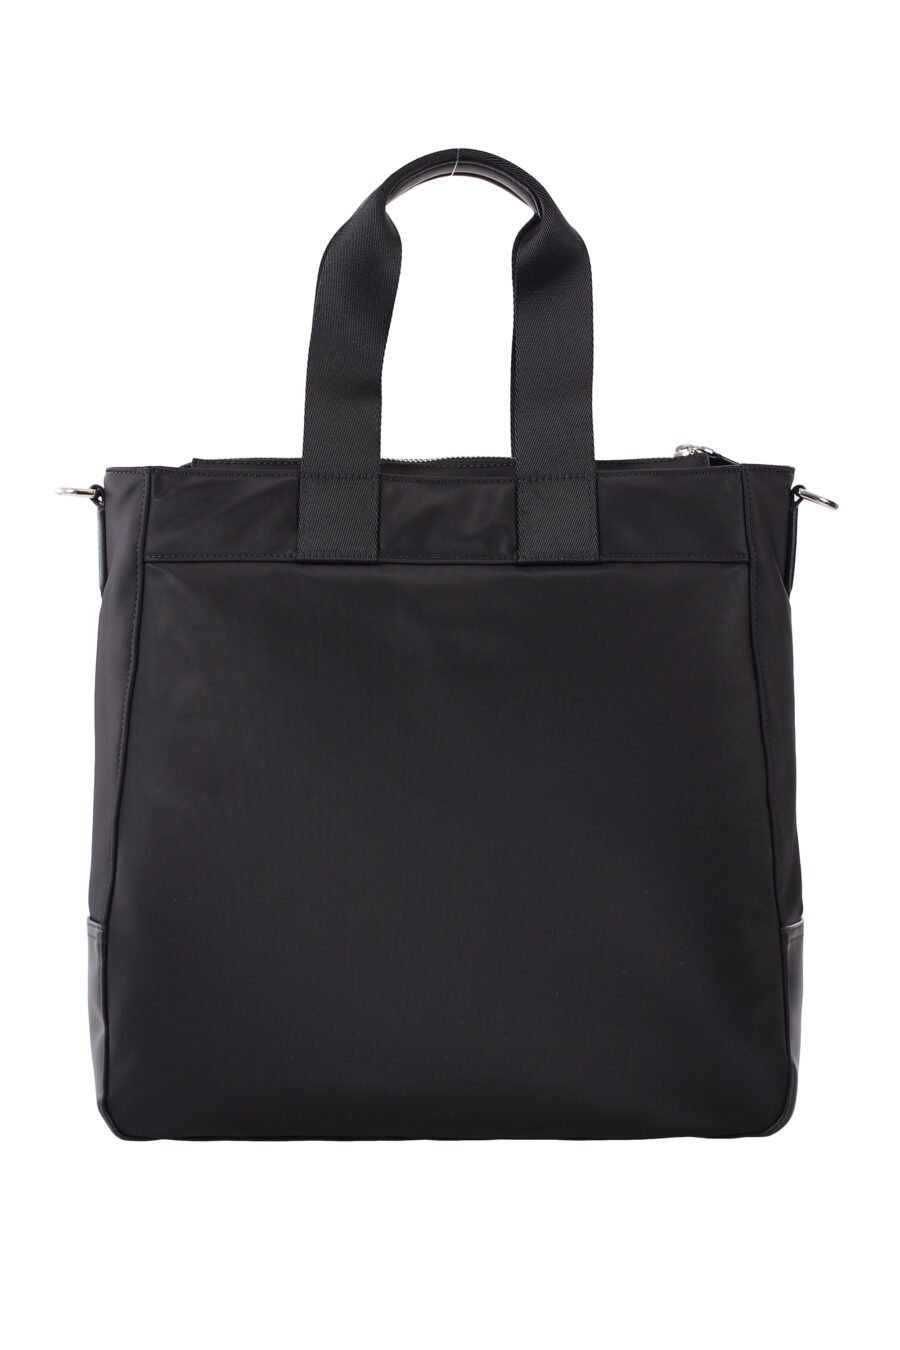 Tote bag negro de nylon con logo "rue st-guillaume" - IMG 1594